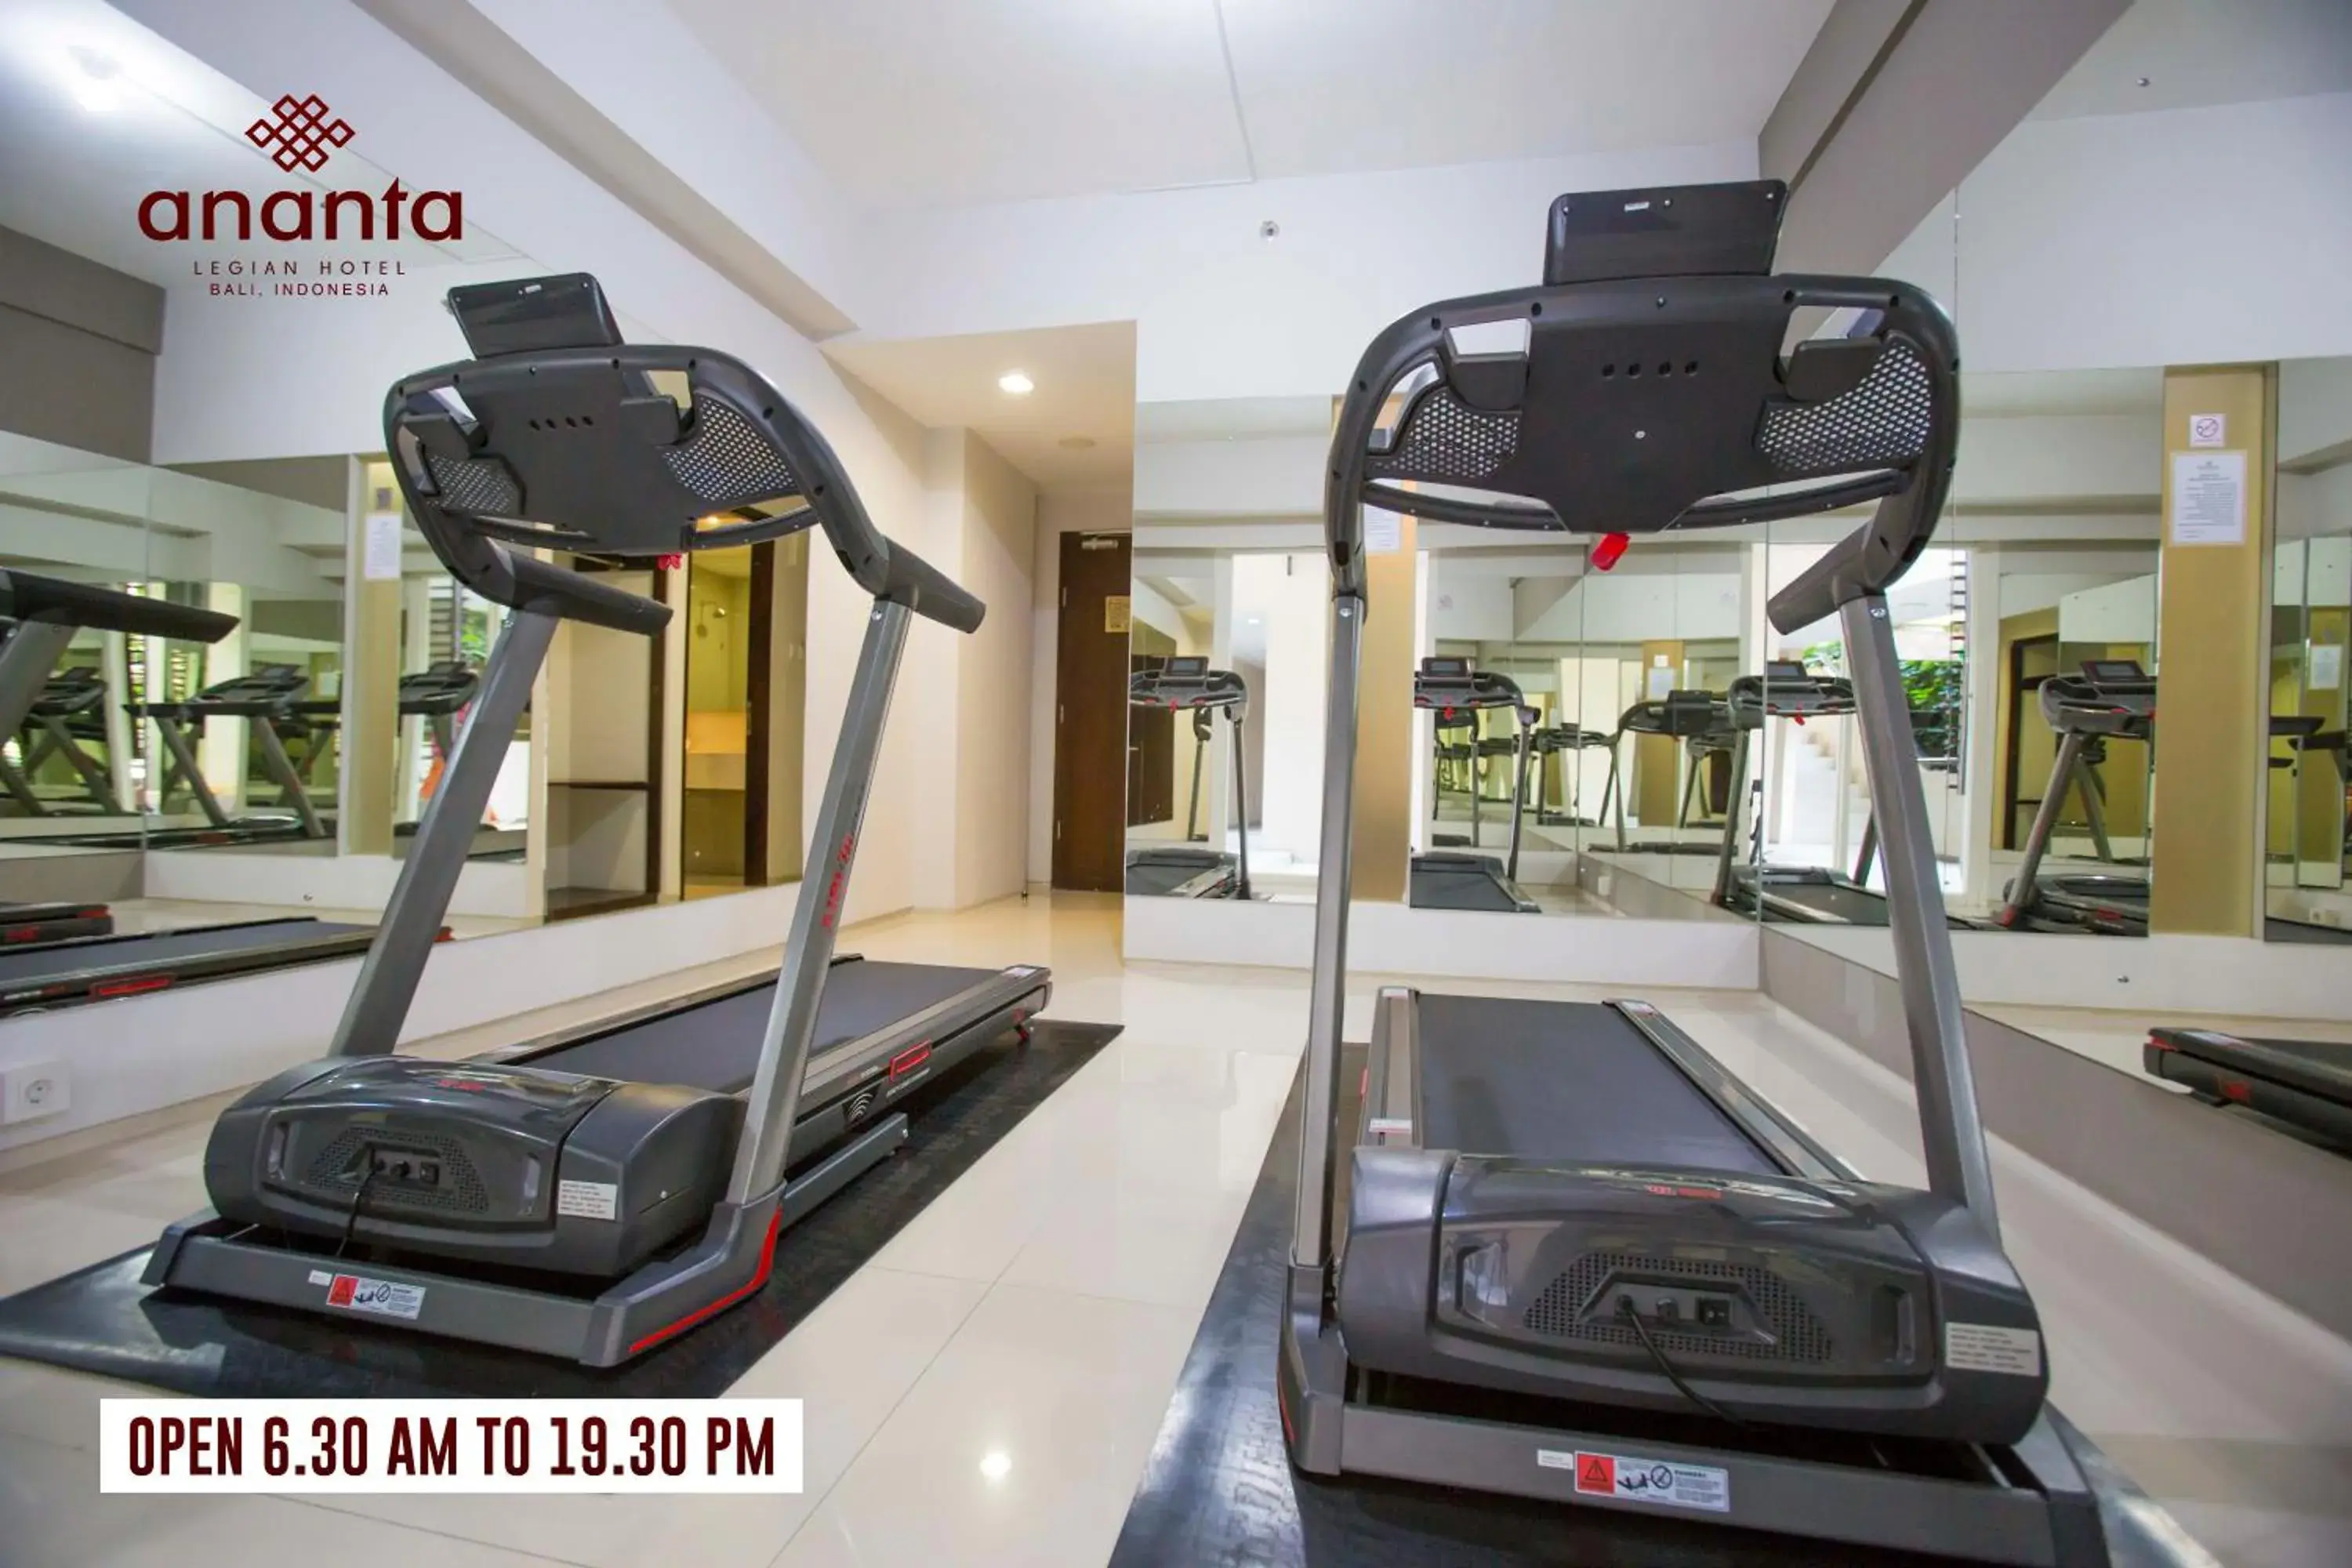 Activities, Fitness Center/Facilities in Ananta Legian Hotel